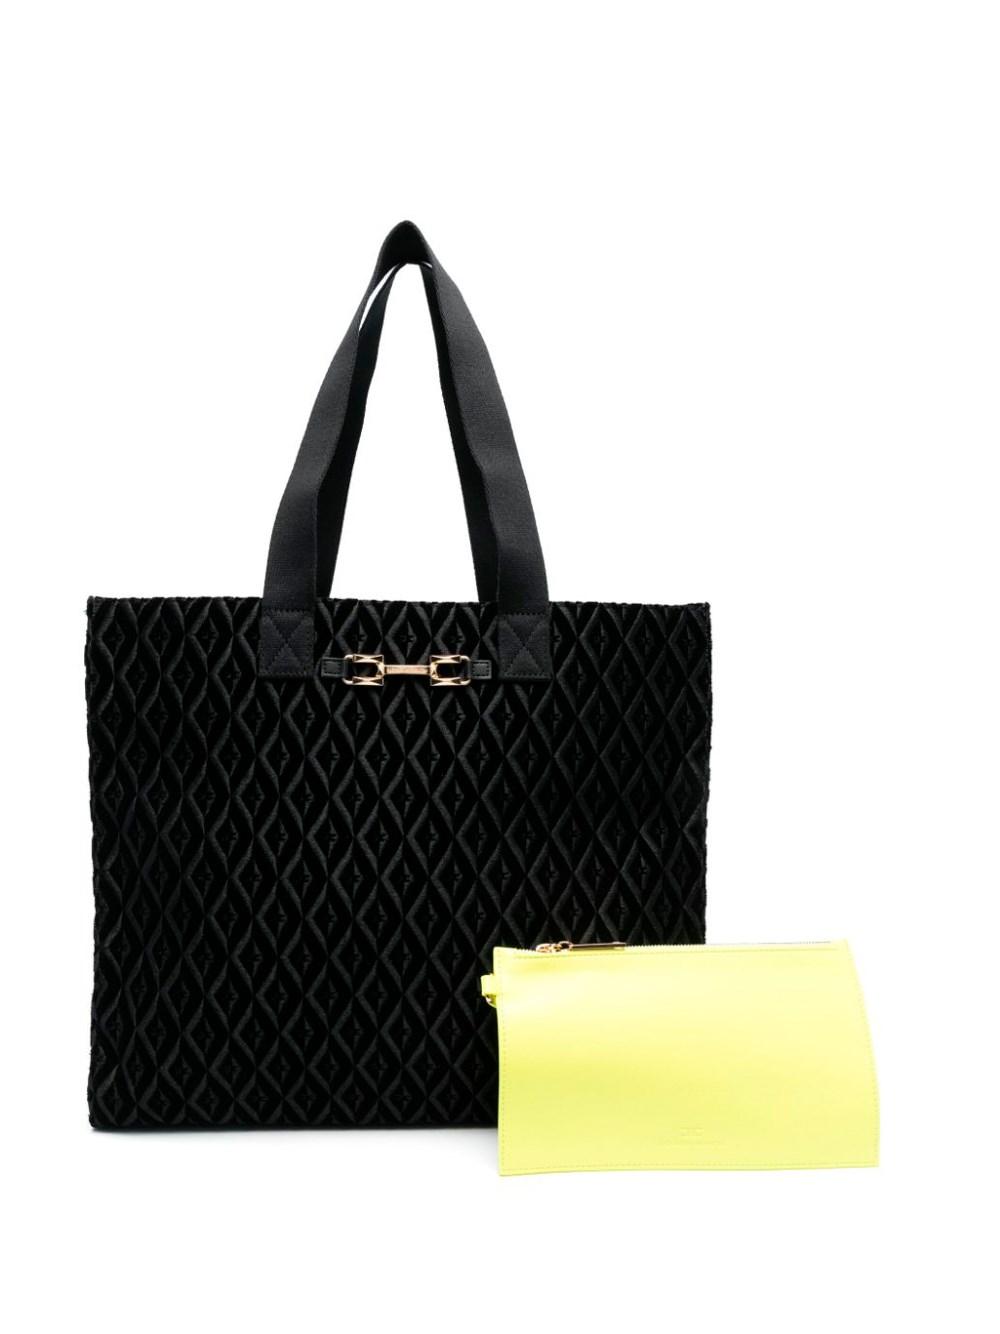 Elisabetta Franchi women's bag in imitation leather Black